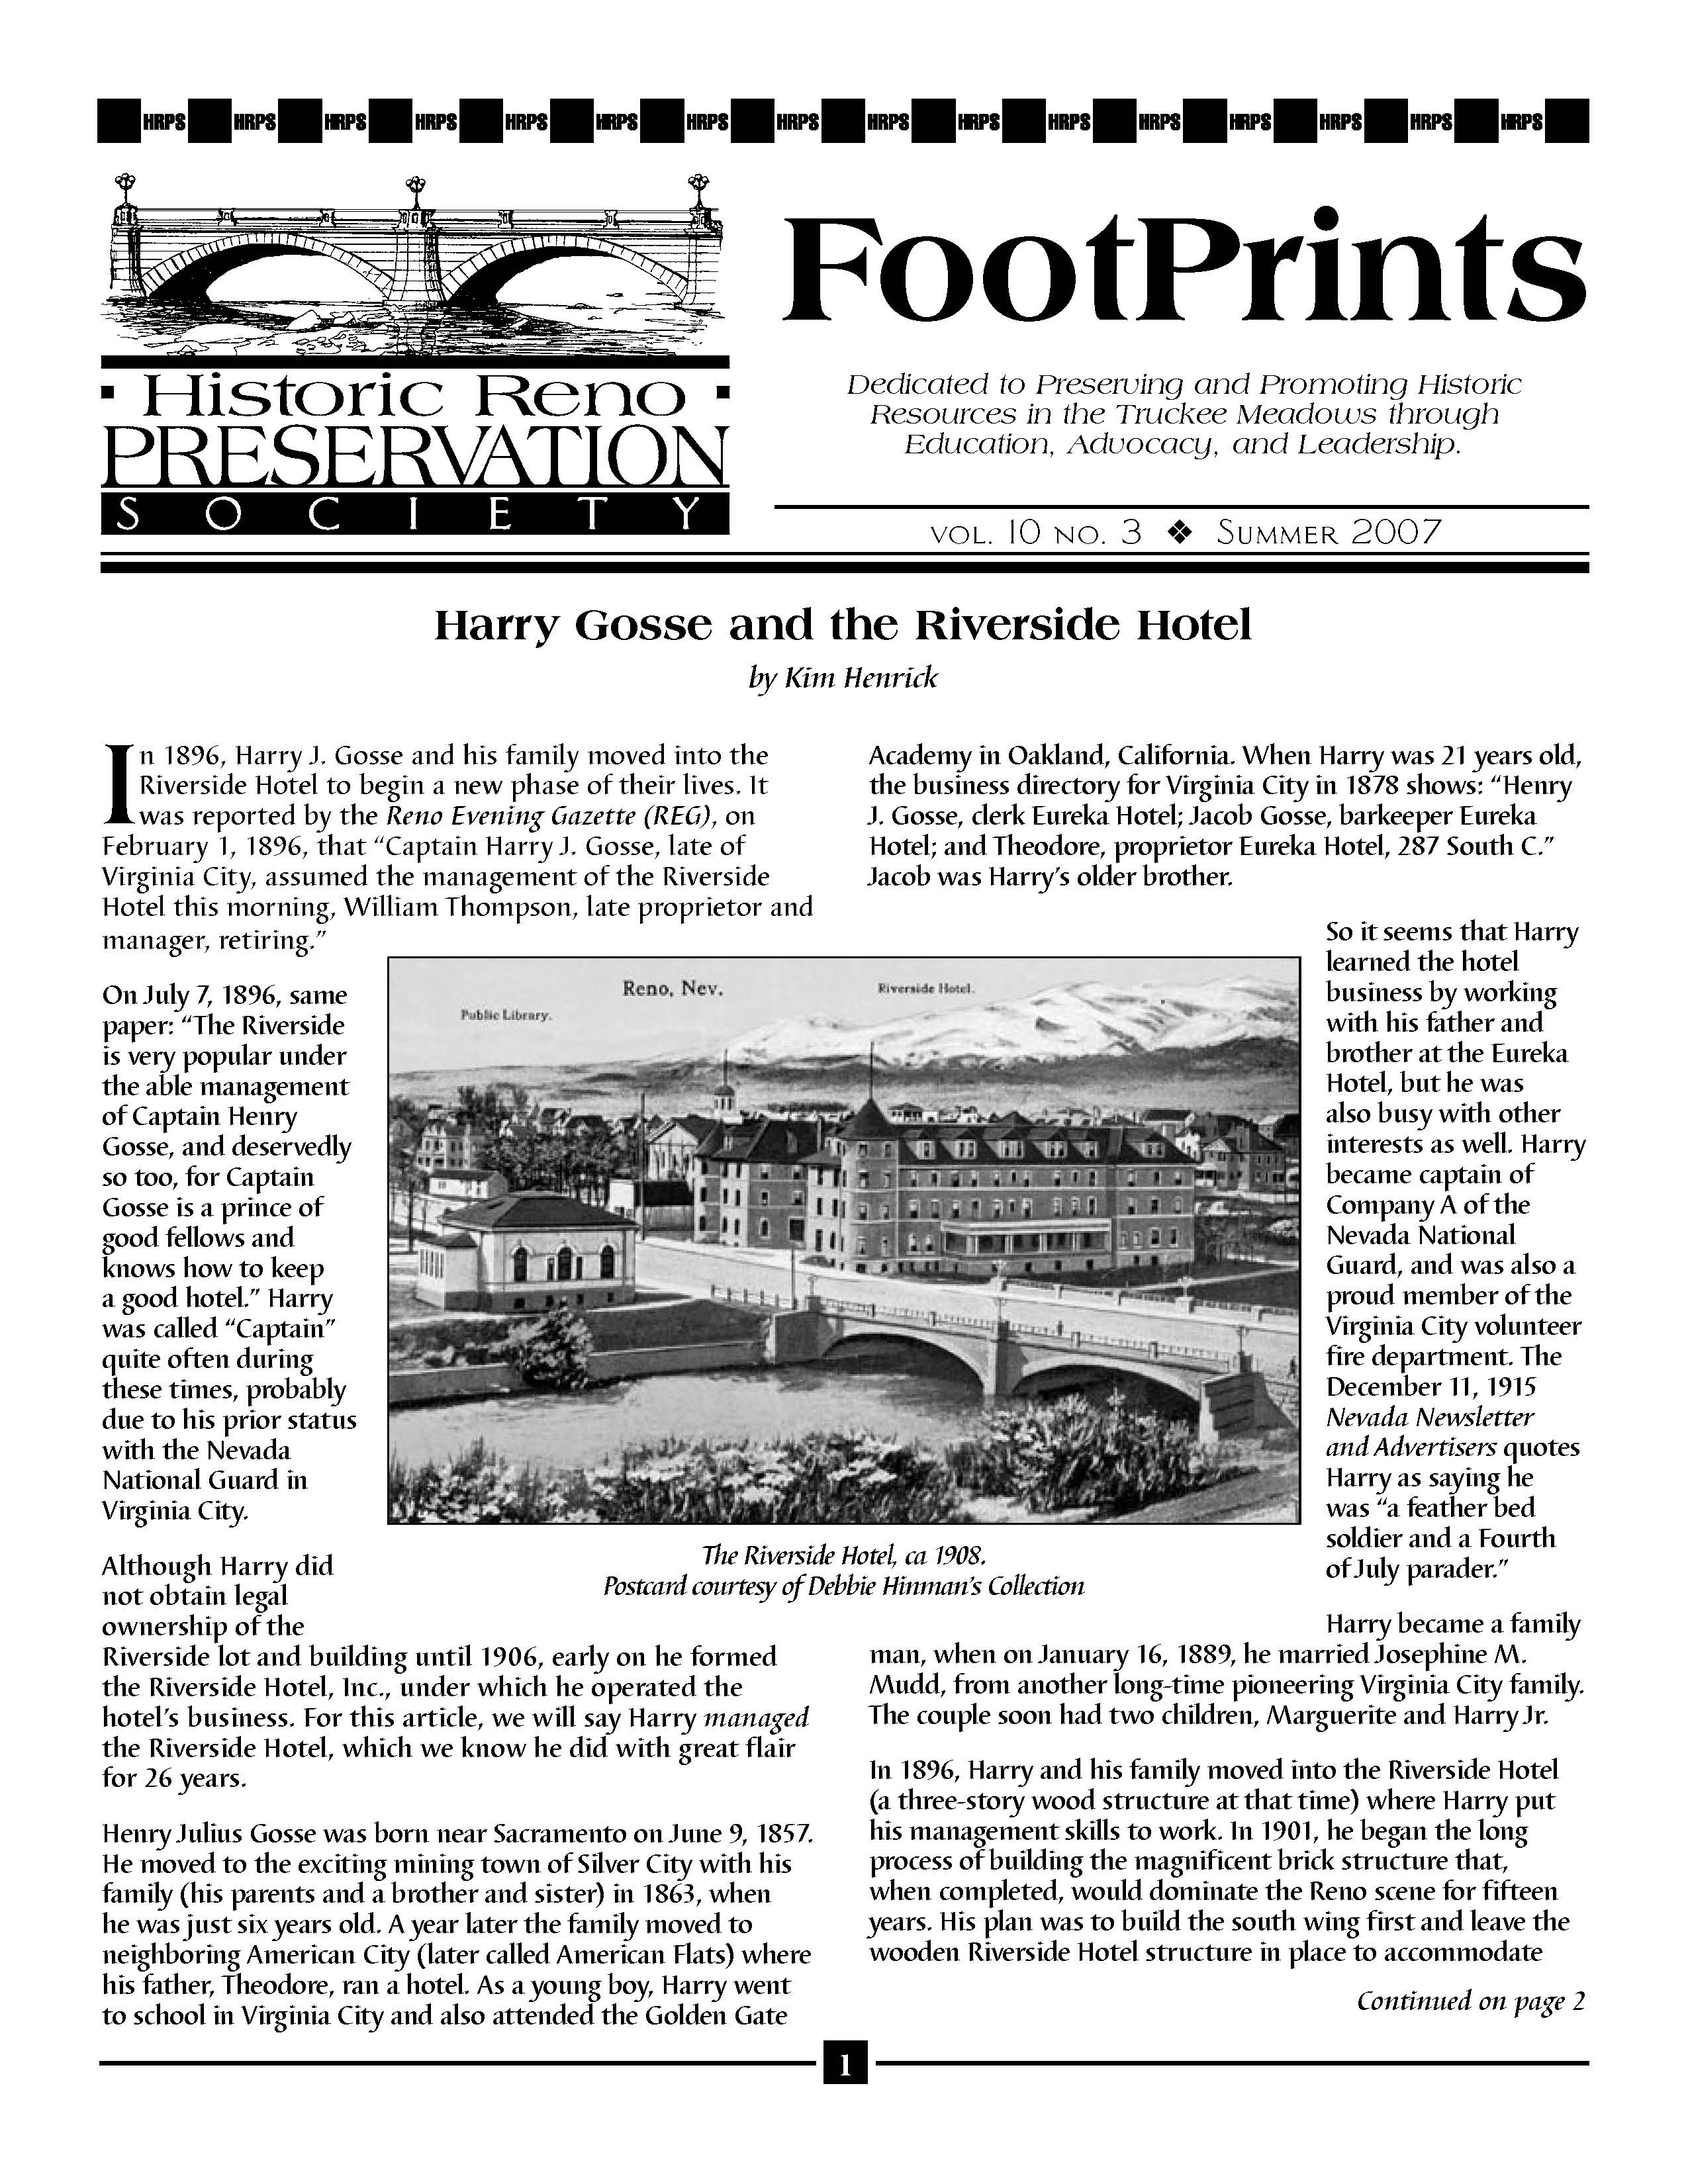 FootPrints Volume 10, Number 3, Summer 2007